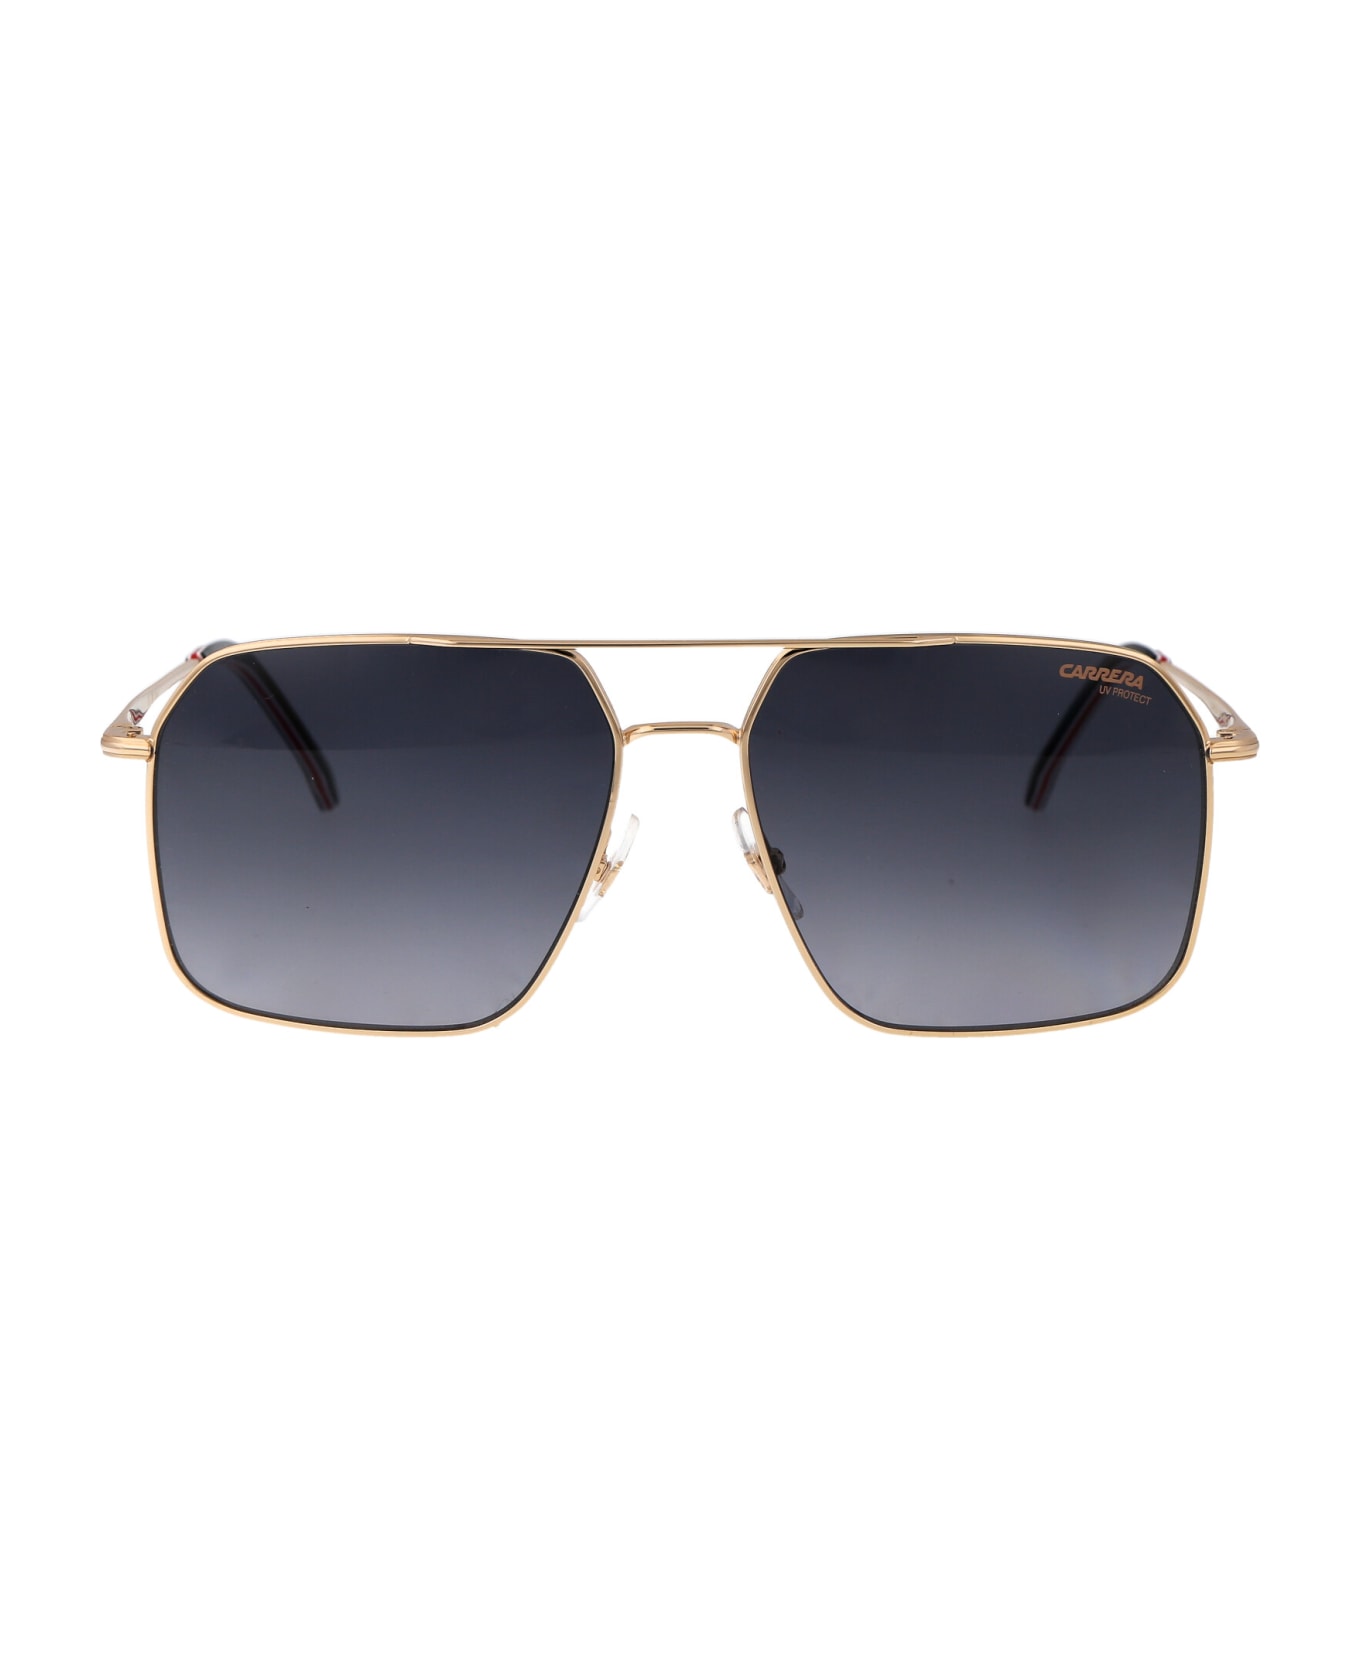 Carrera 333/s Sunglasses - J5G9O GOLD サングラス